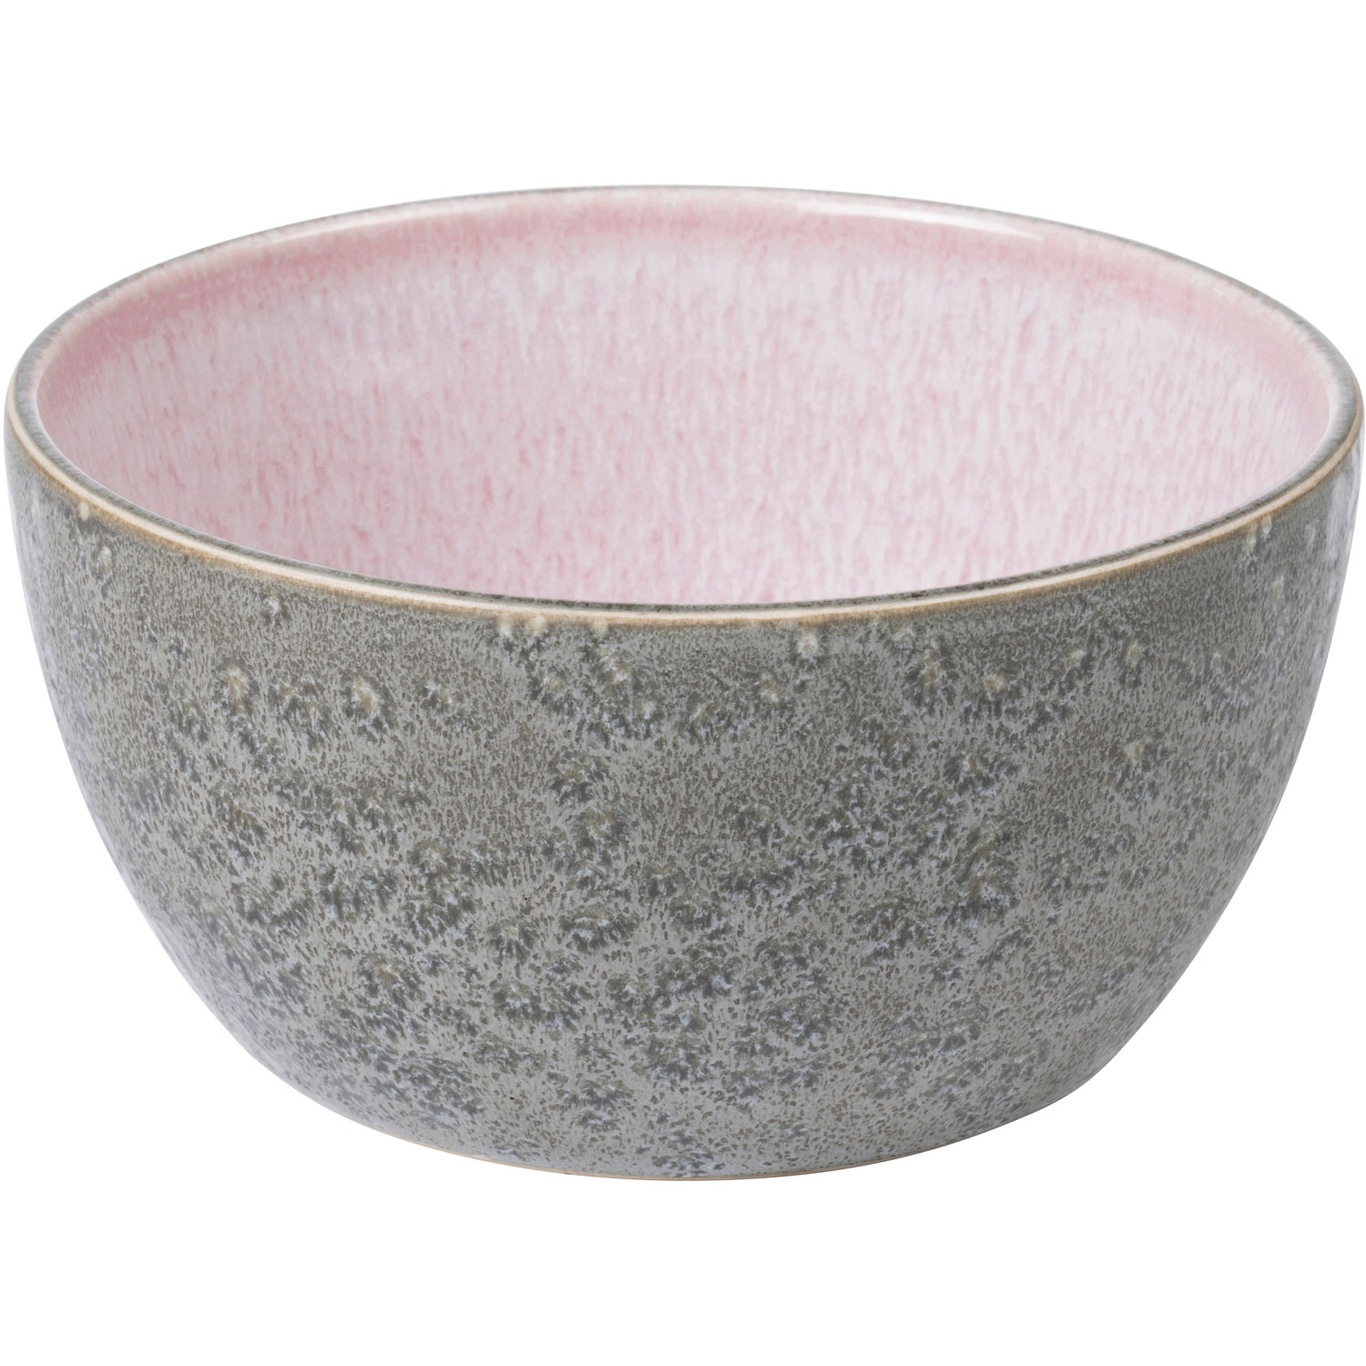 Bitz Bowl 14 cm, Grey/Pink